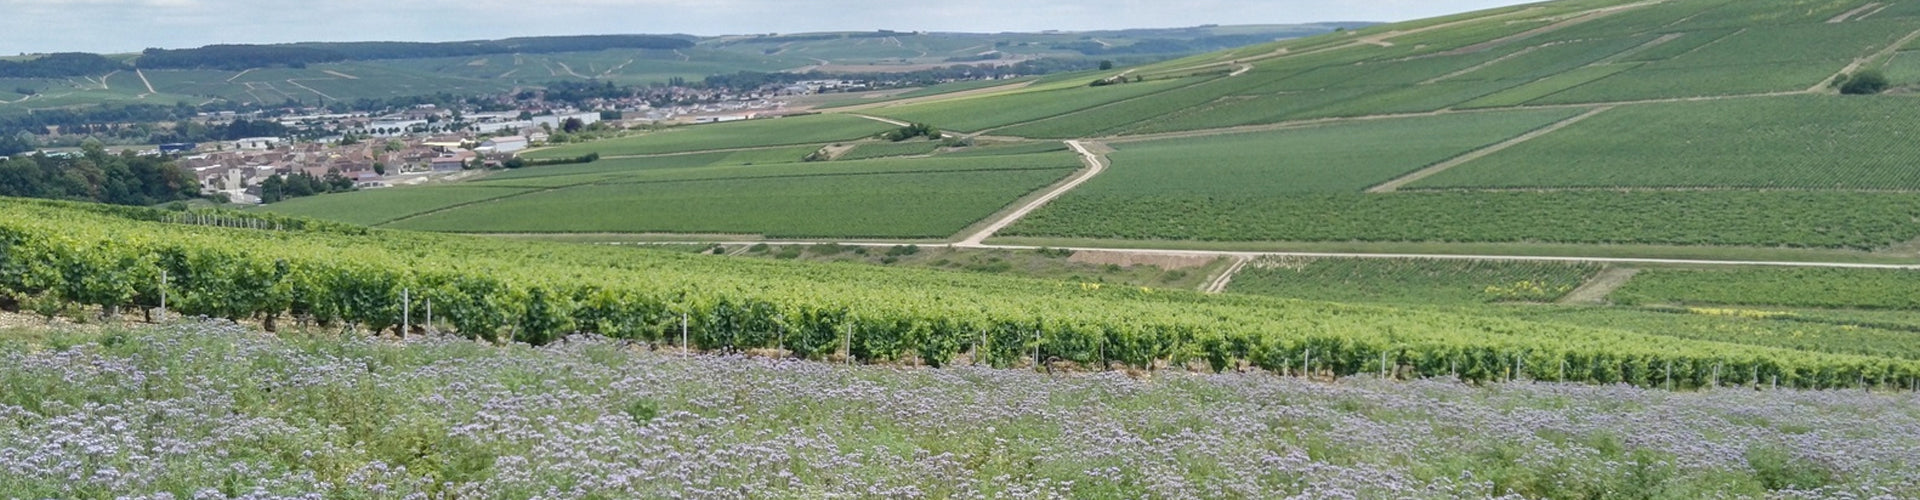 Domaine Sébastien Dampt Vineyards in Chablis